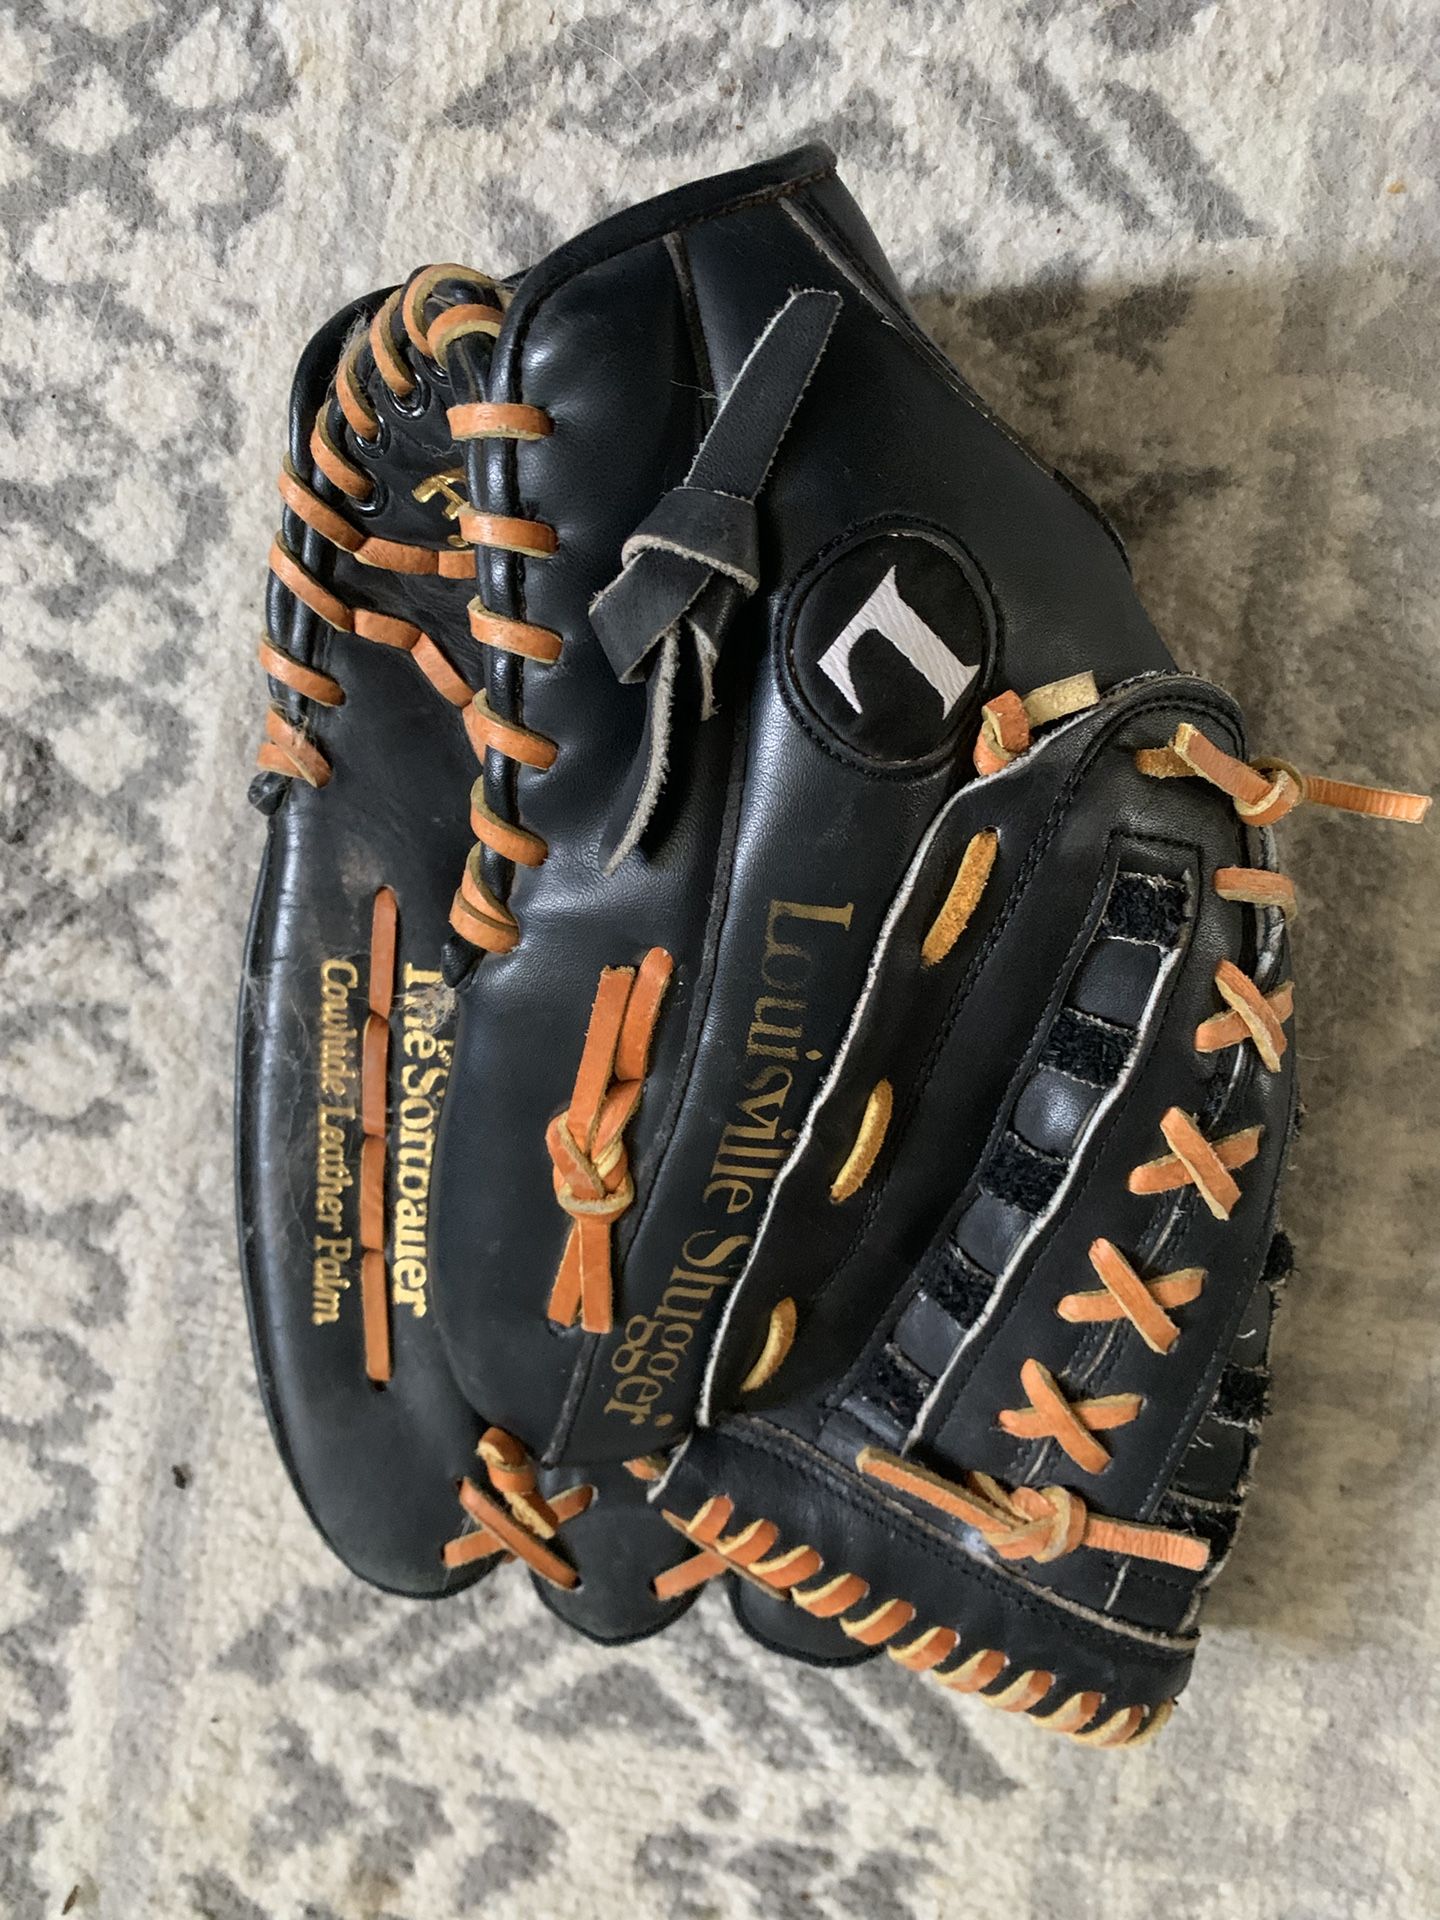 Louisville Slugger Softball Glove Size 13 1/2